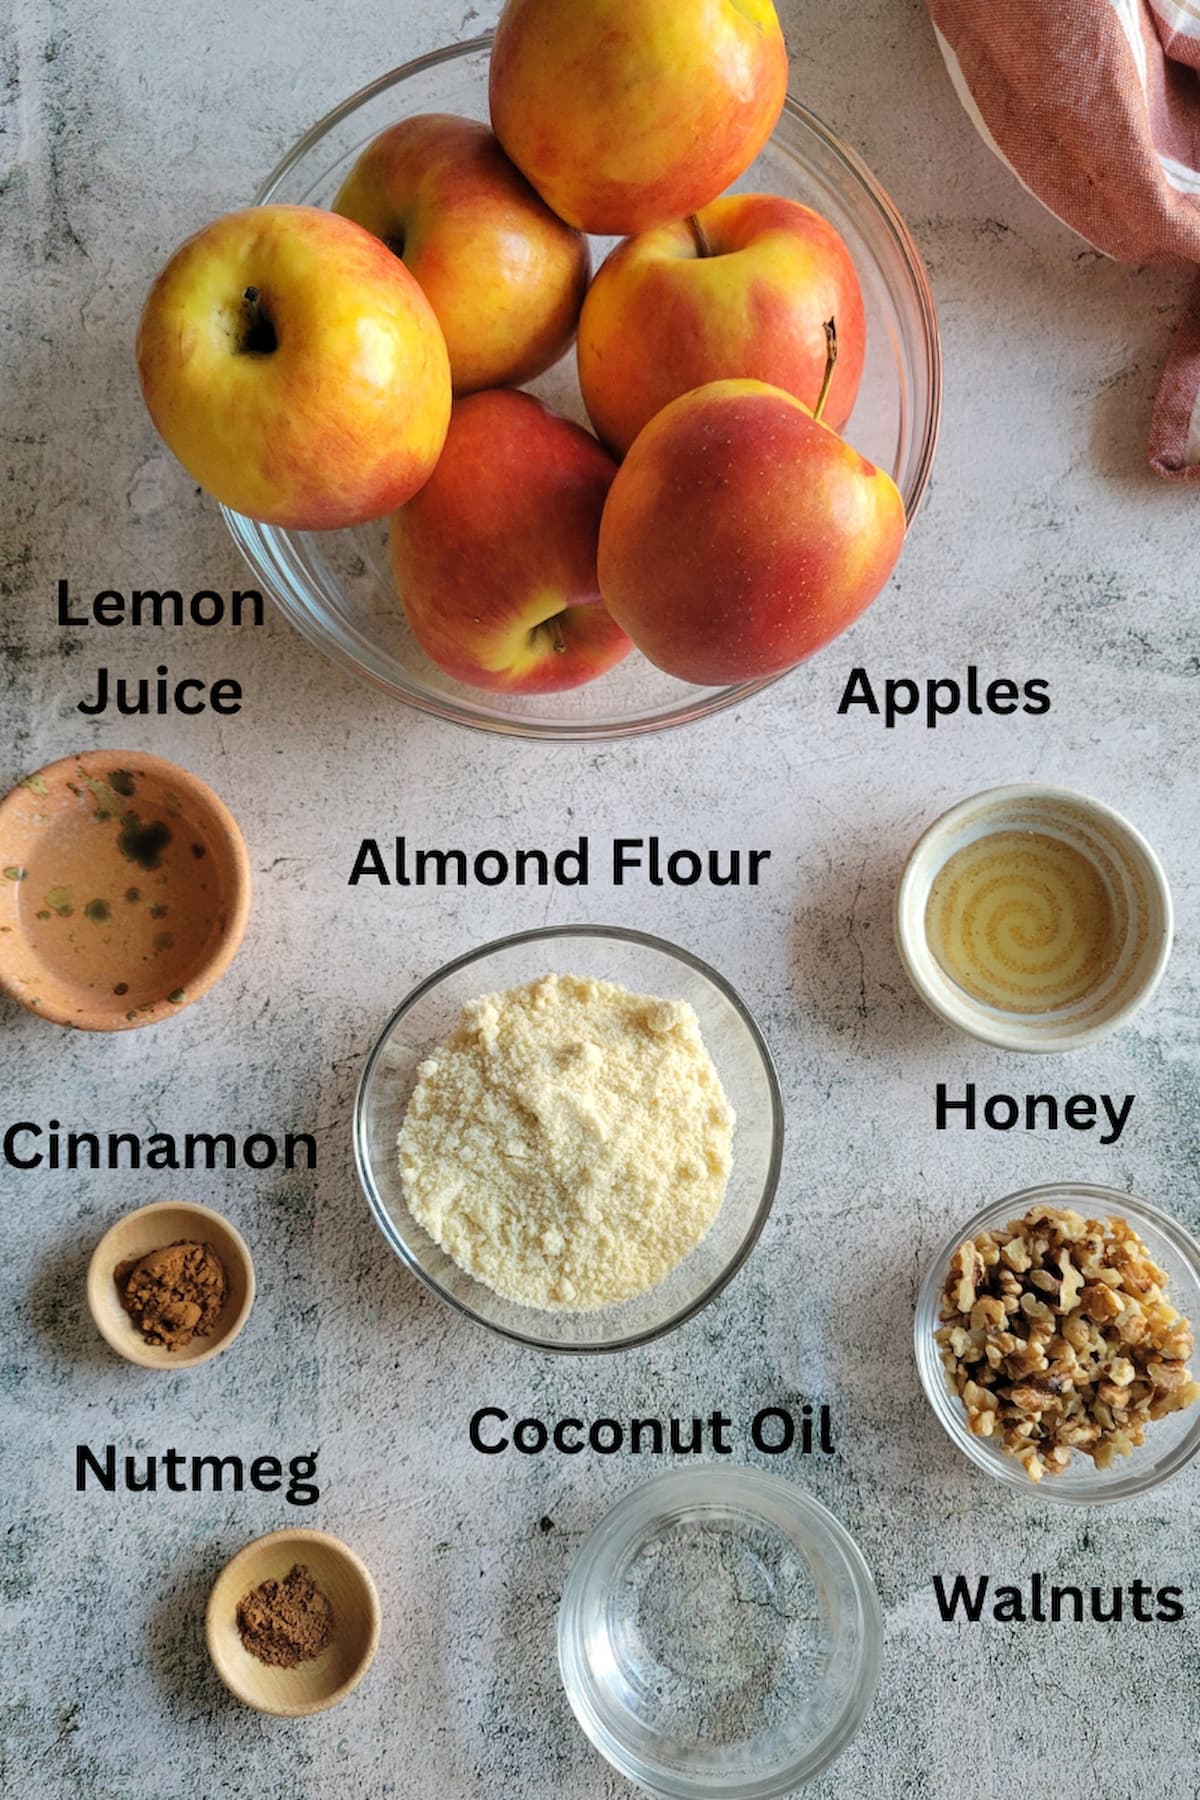 ingredients for recipe for apple crisp no oats - apples, almond flour, cinnamon, nutmeg, honey, lemon juice, walnuts, coconut oil